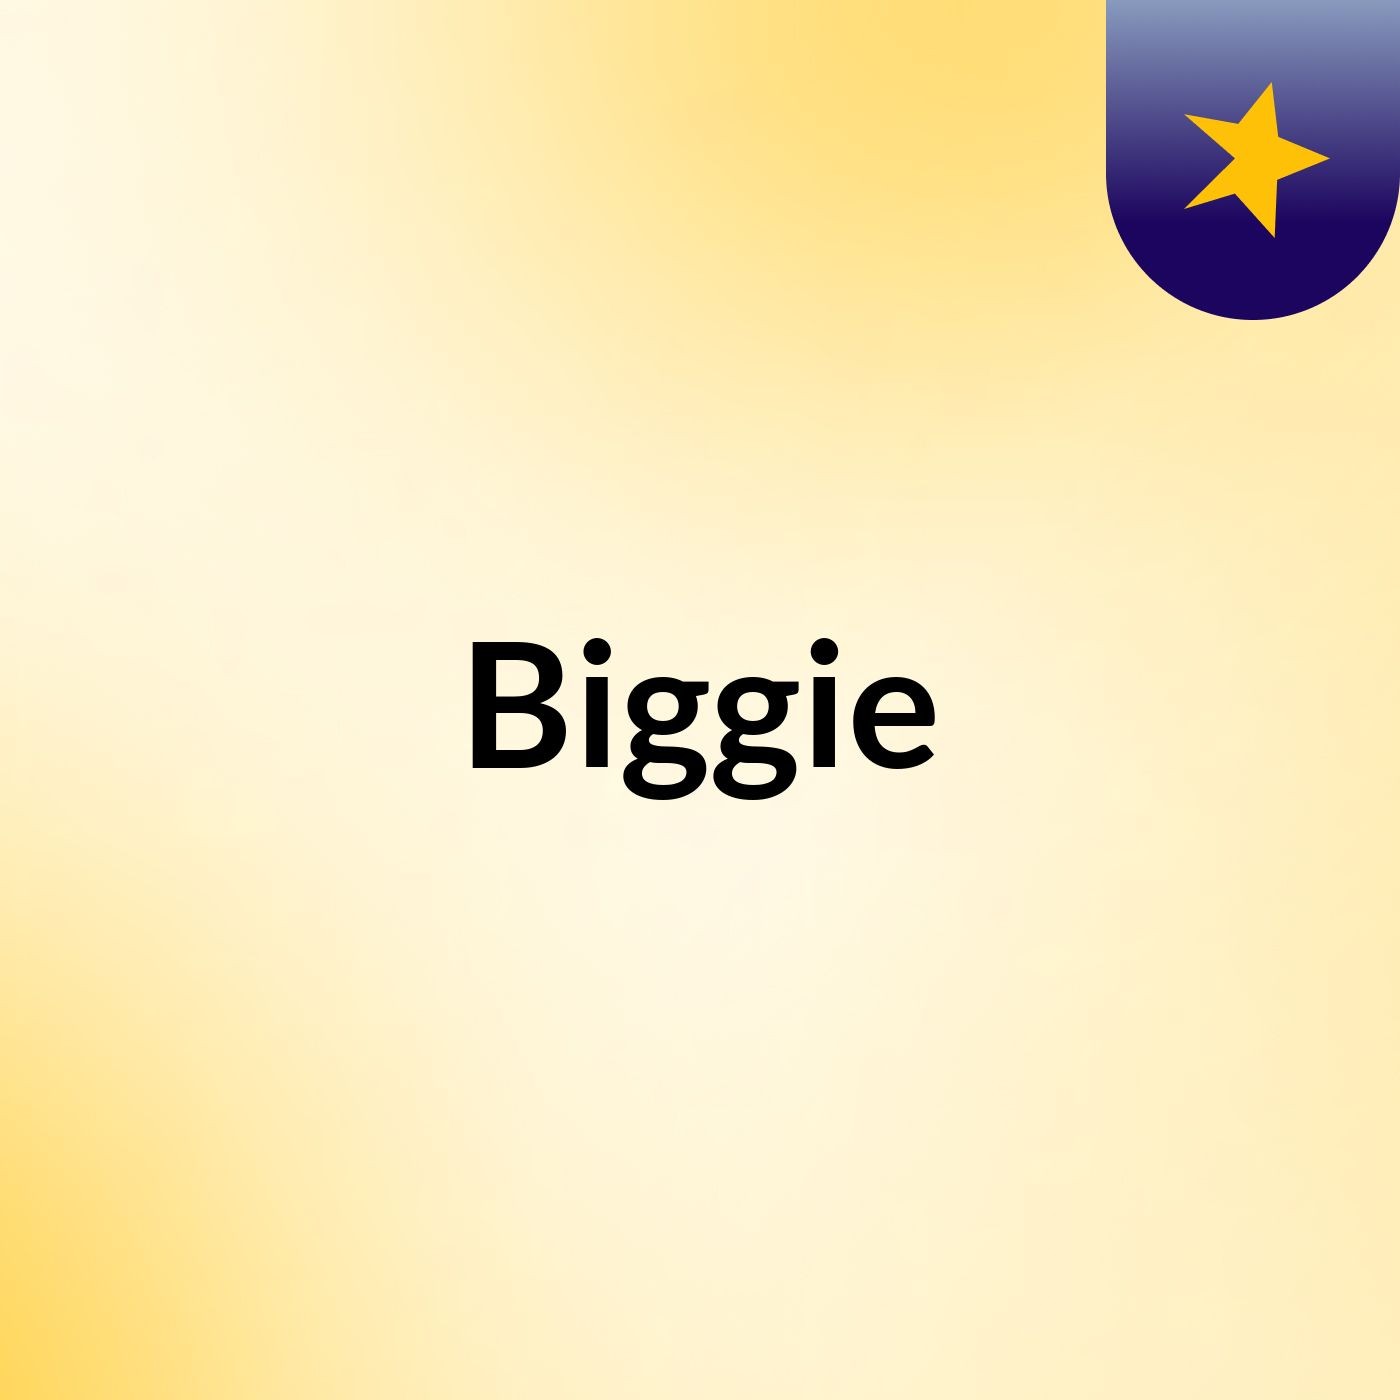 Episode 1 - Biggie